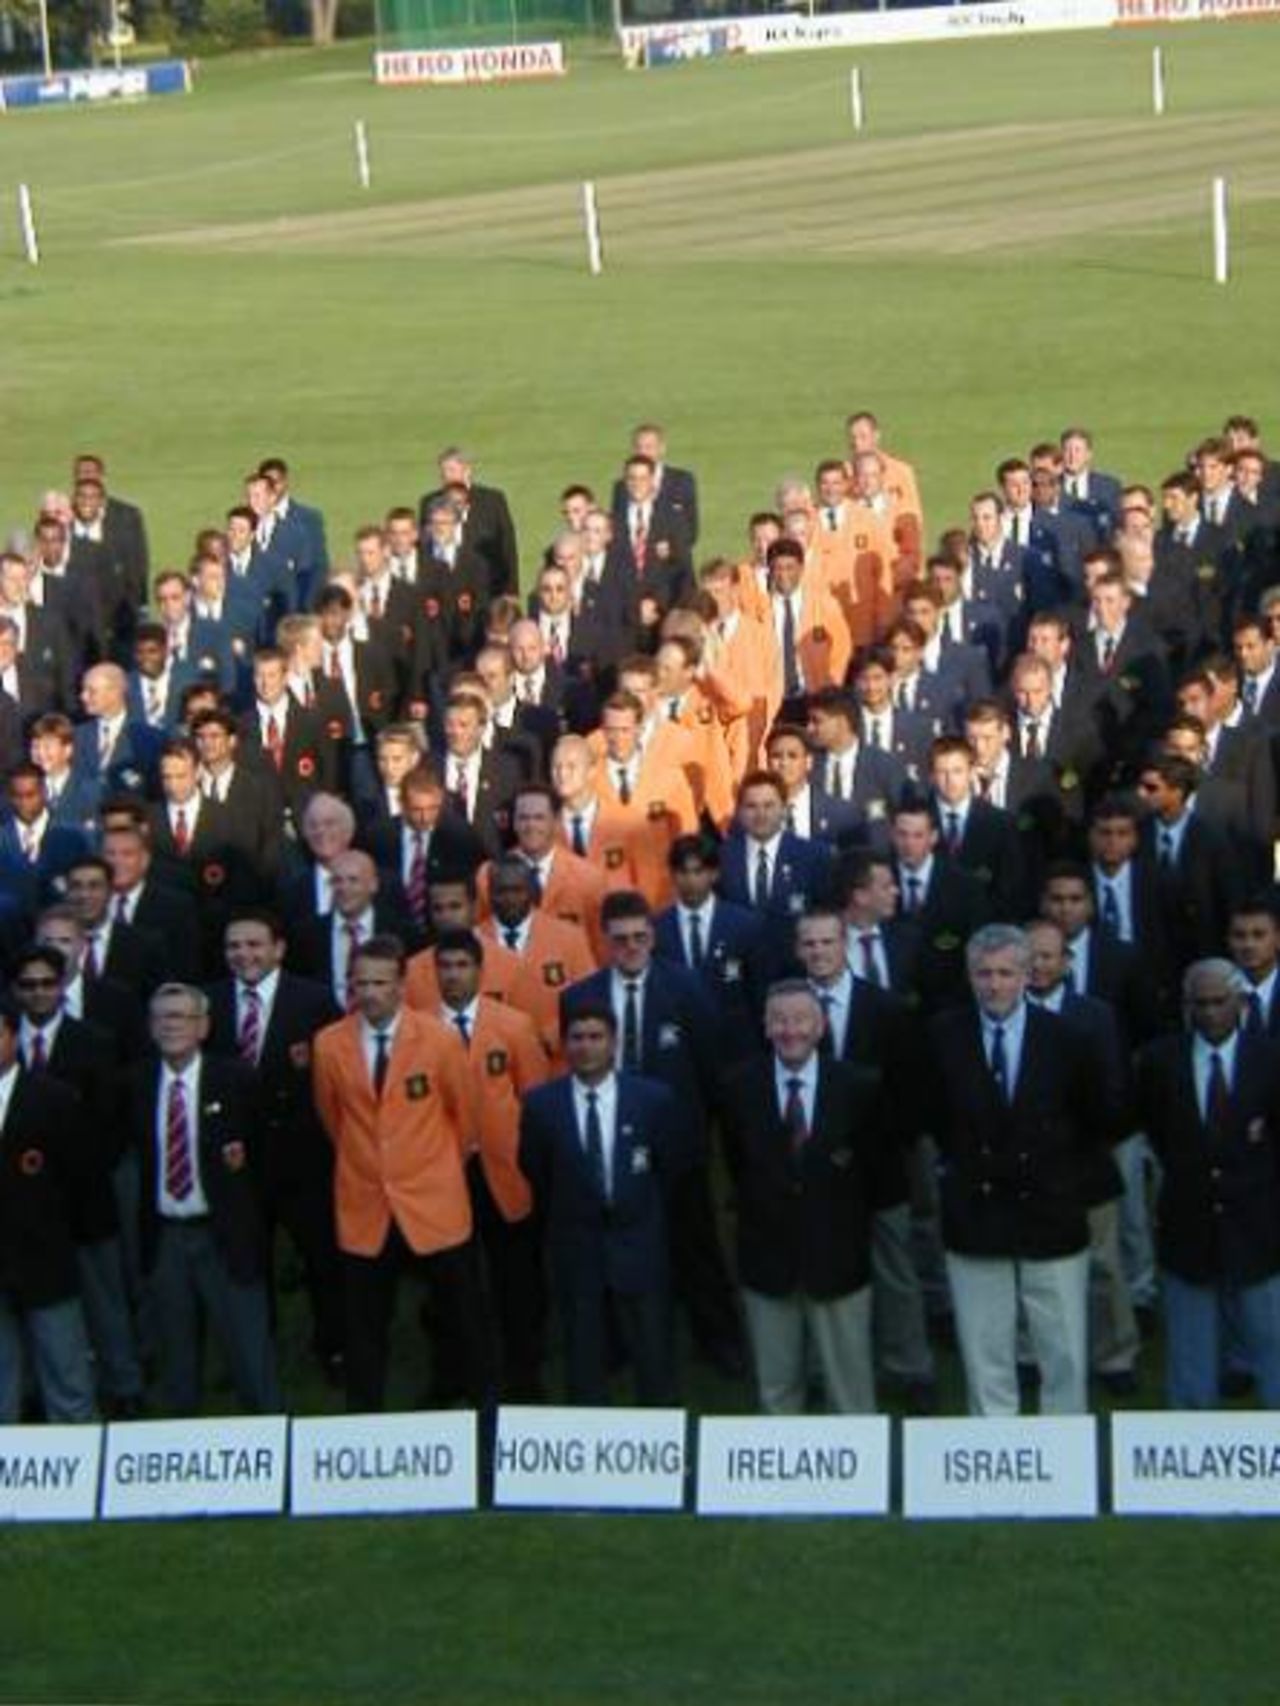 ICC Trophy team line up